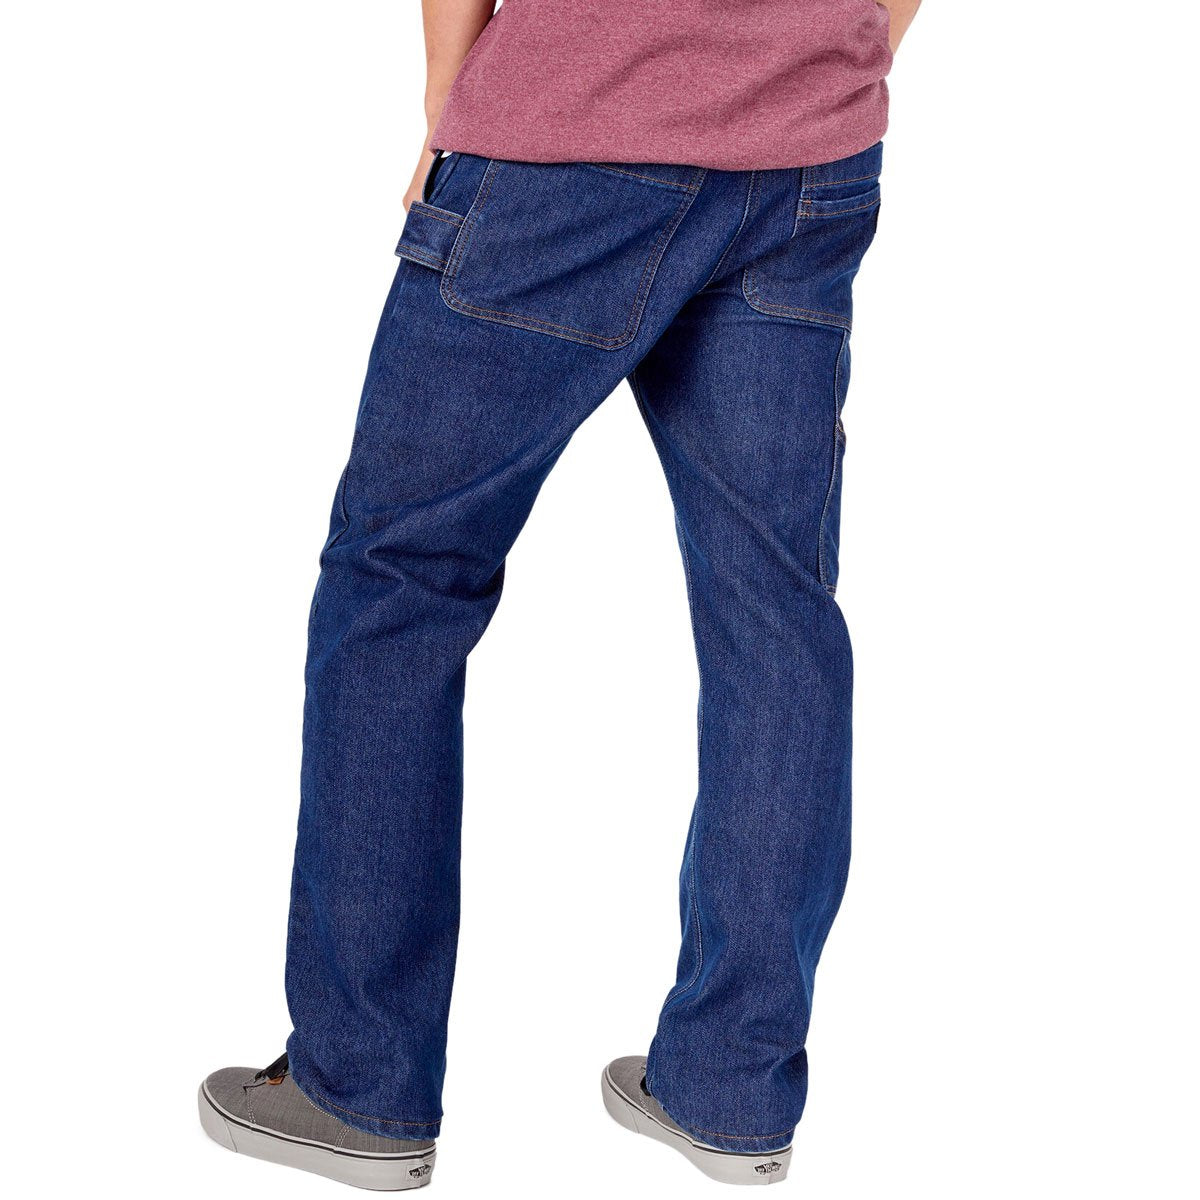 Dickies 67 Collection Denim Jeans - Stonewashed Indigo Blue image 2